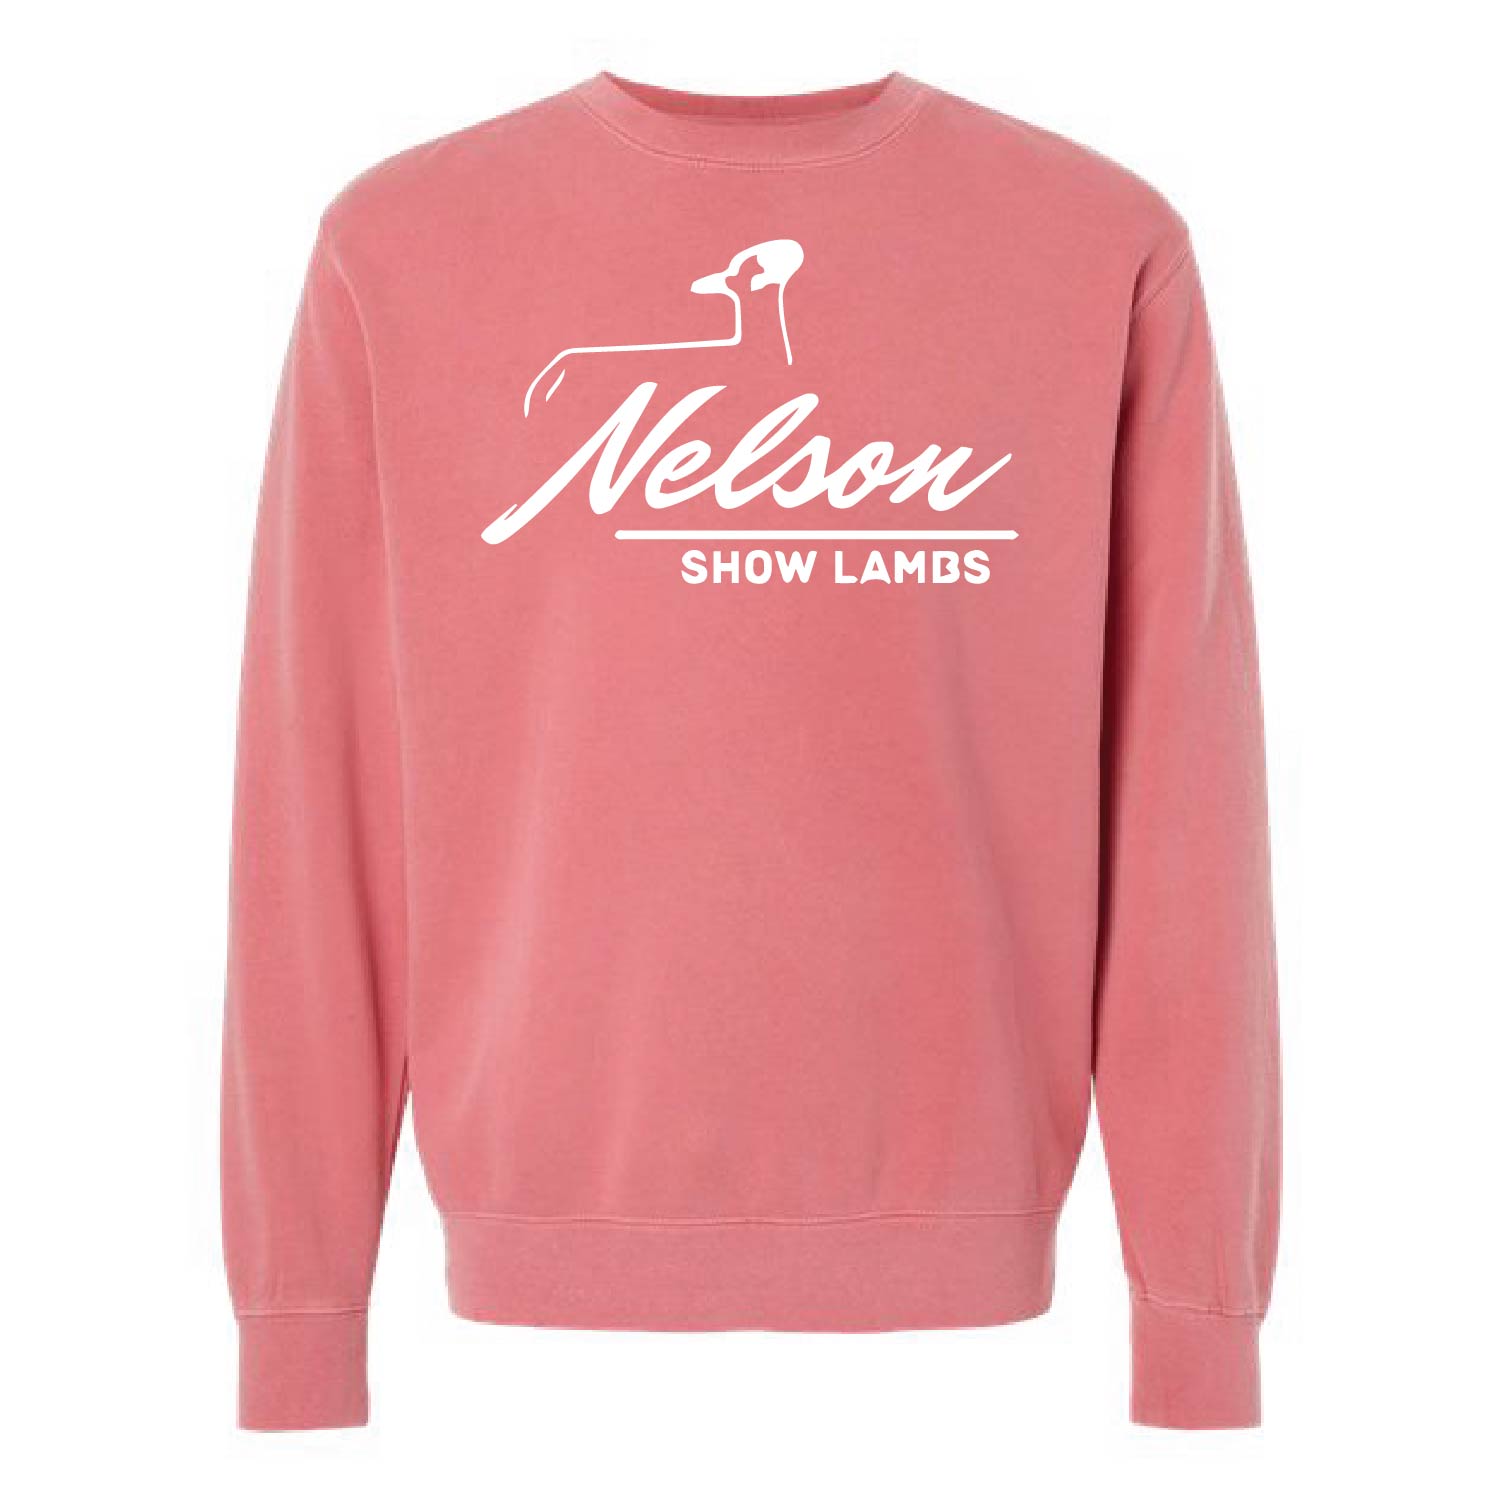 Nelson Show Lambs Sweatshirts